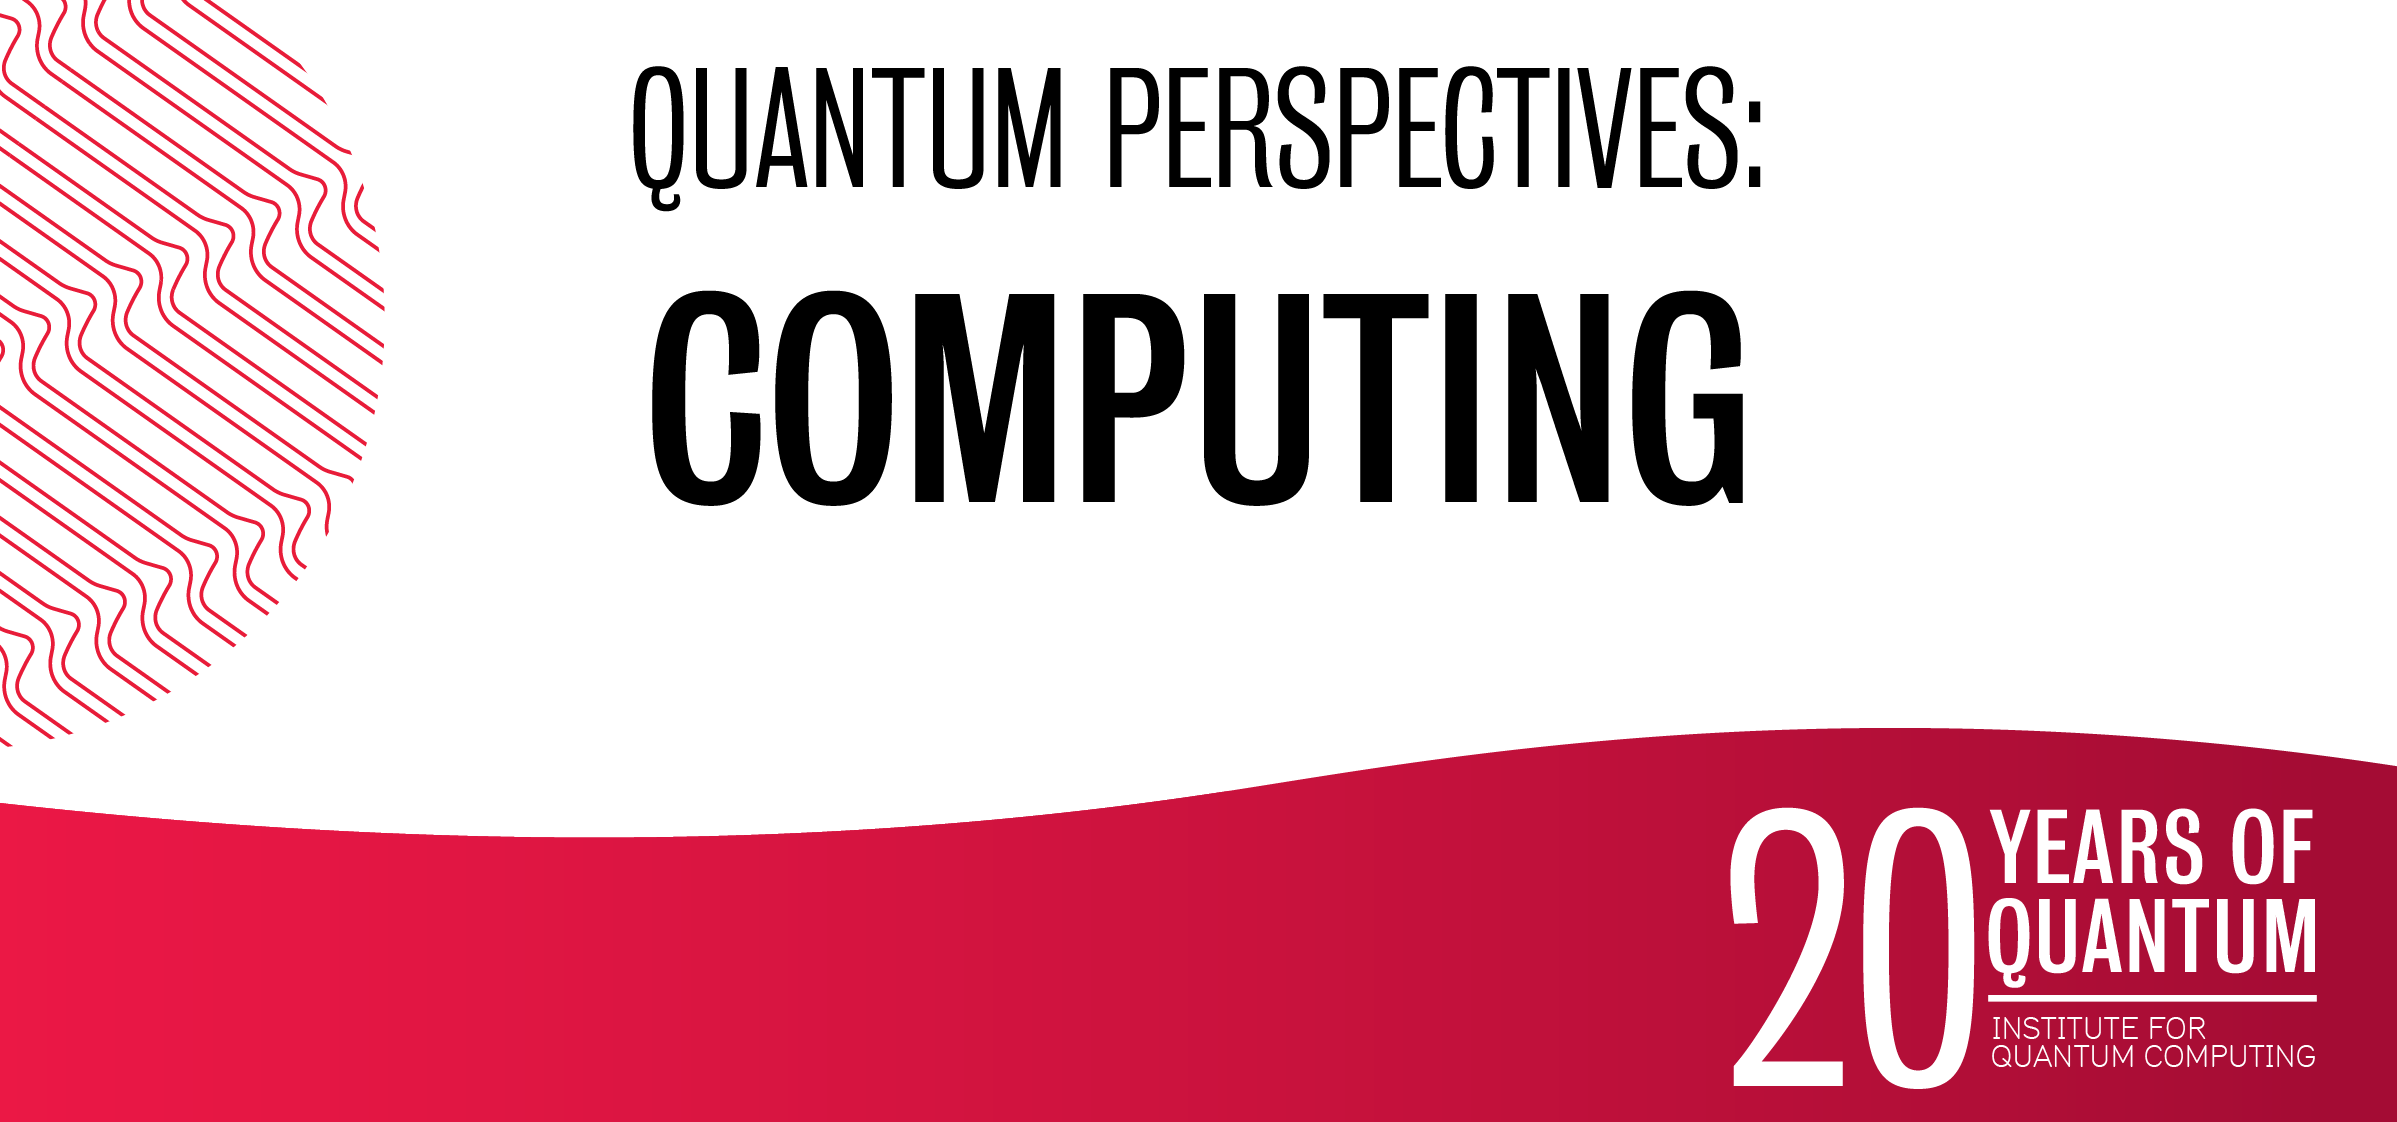 quantum perspectives: computing poster 